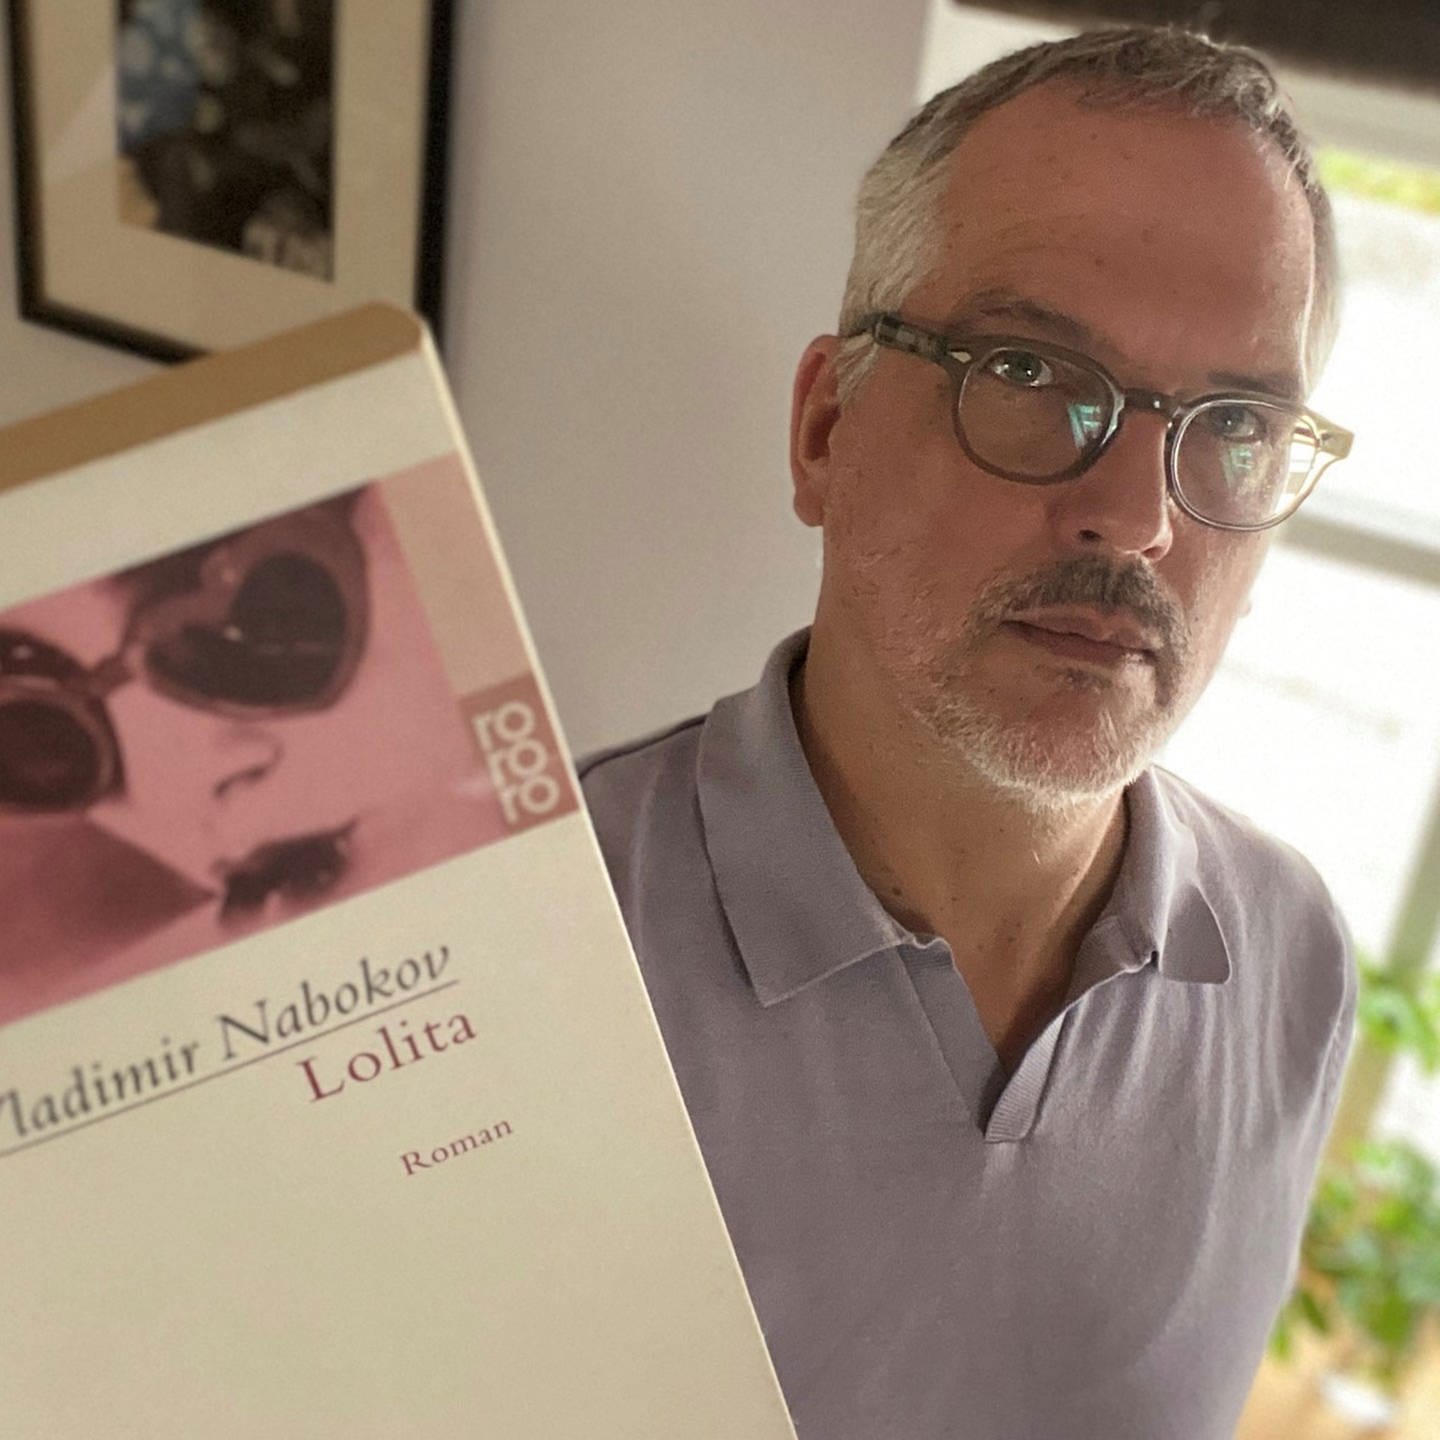 Vladimir Nabokov – Lolita